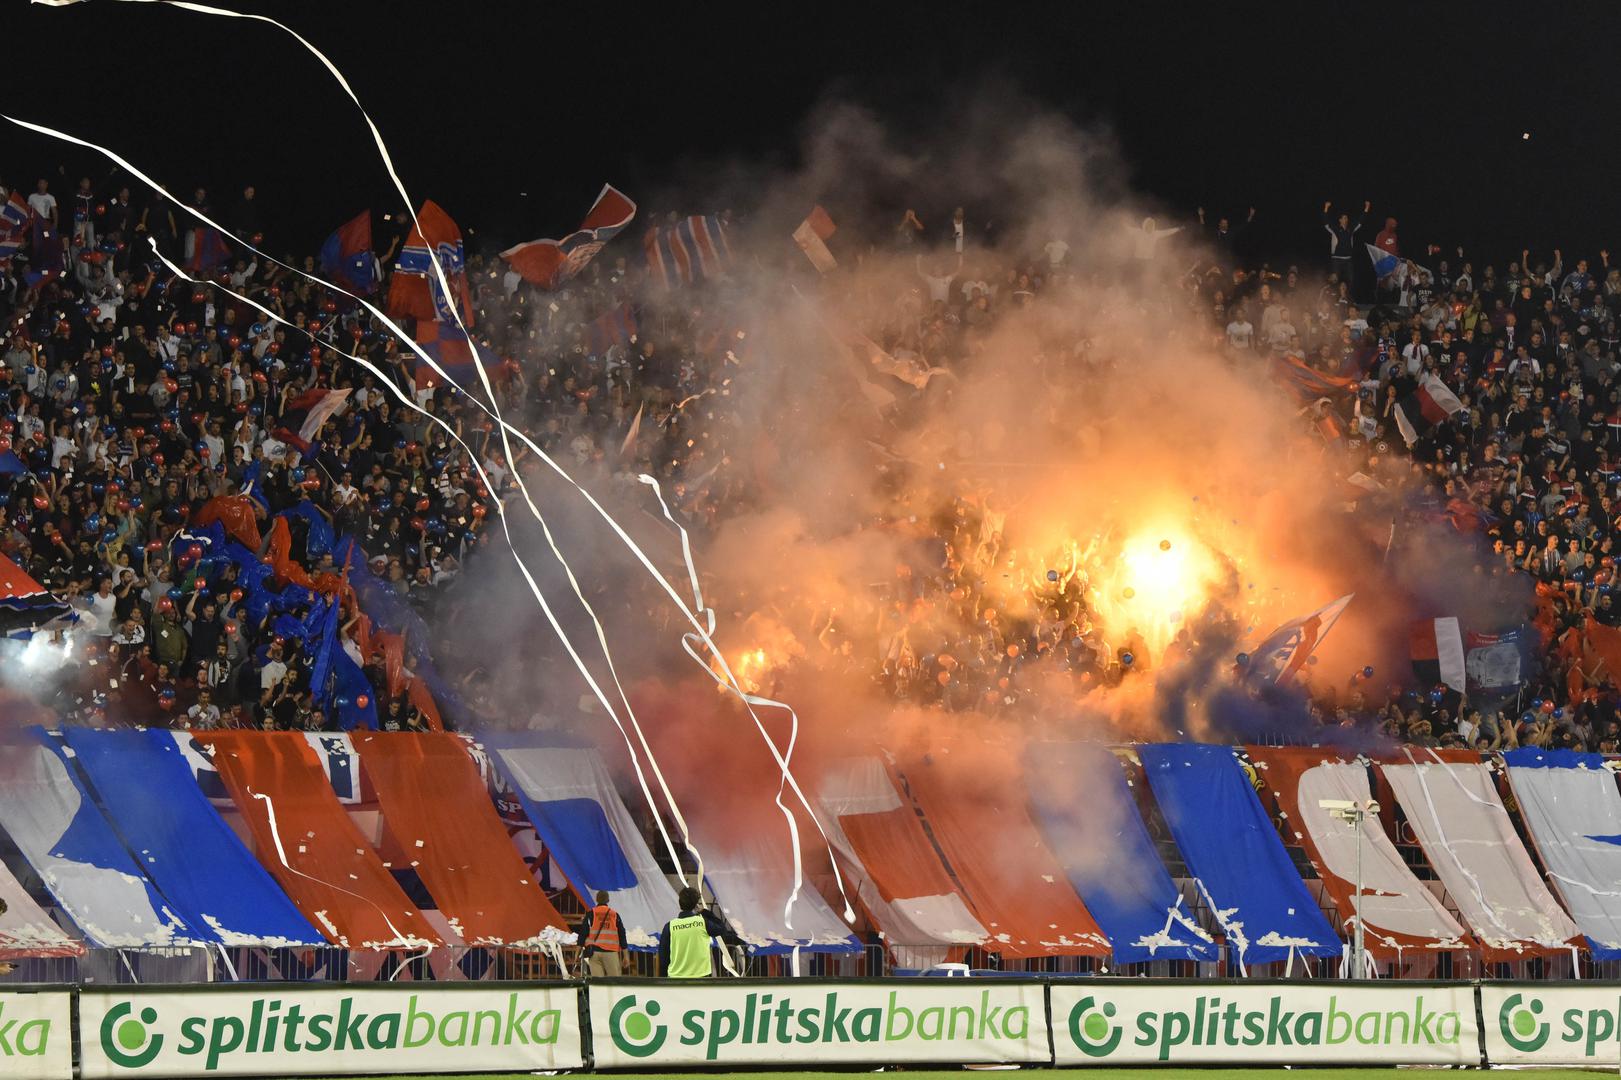 Torcida je uoči utakmice priredila bakljadu, dim je prekrio Poljud pa je utakmica kasnila par minuta.